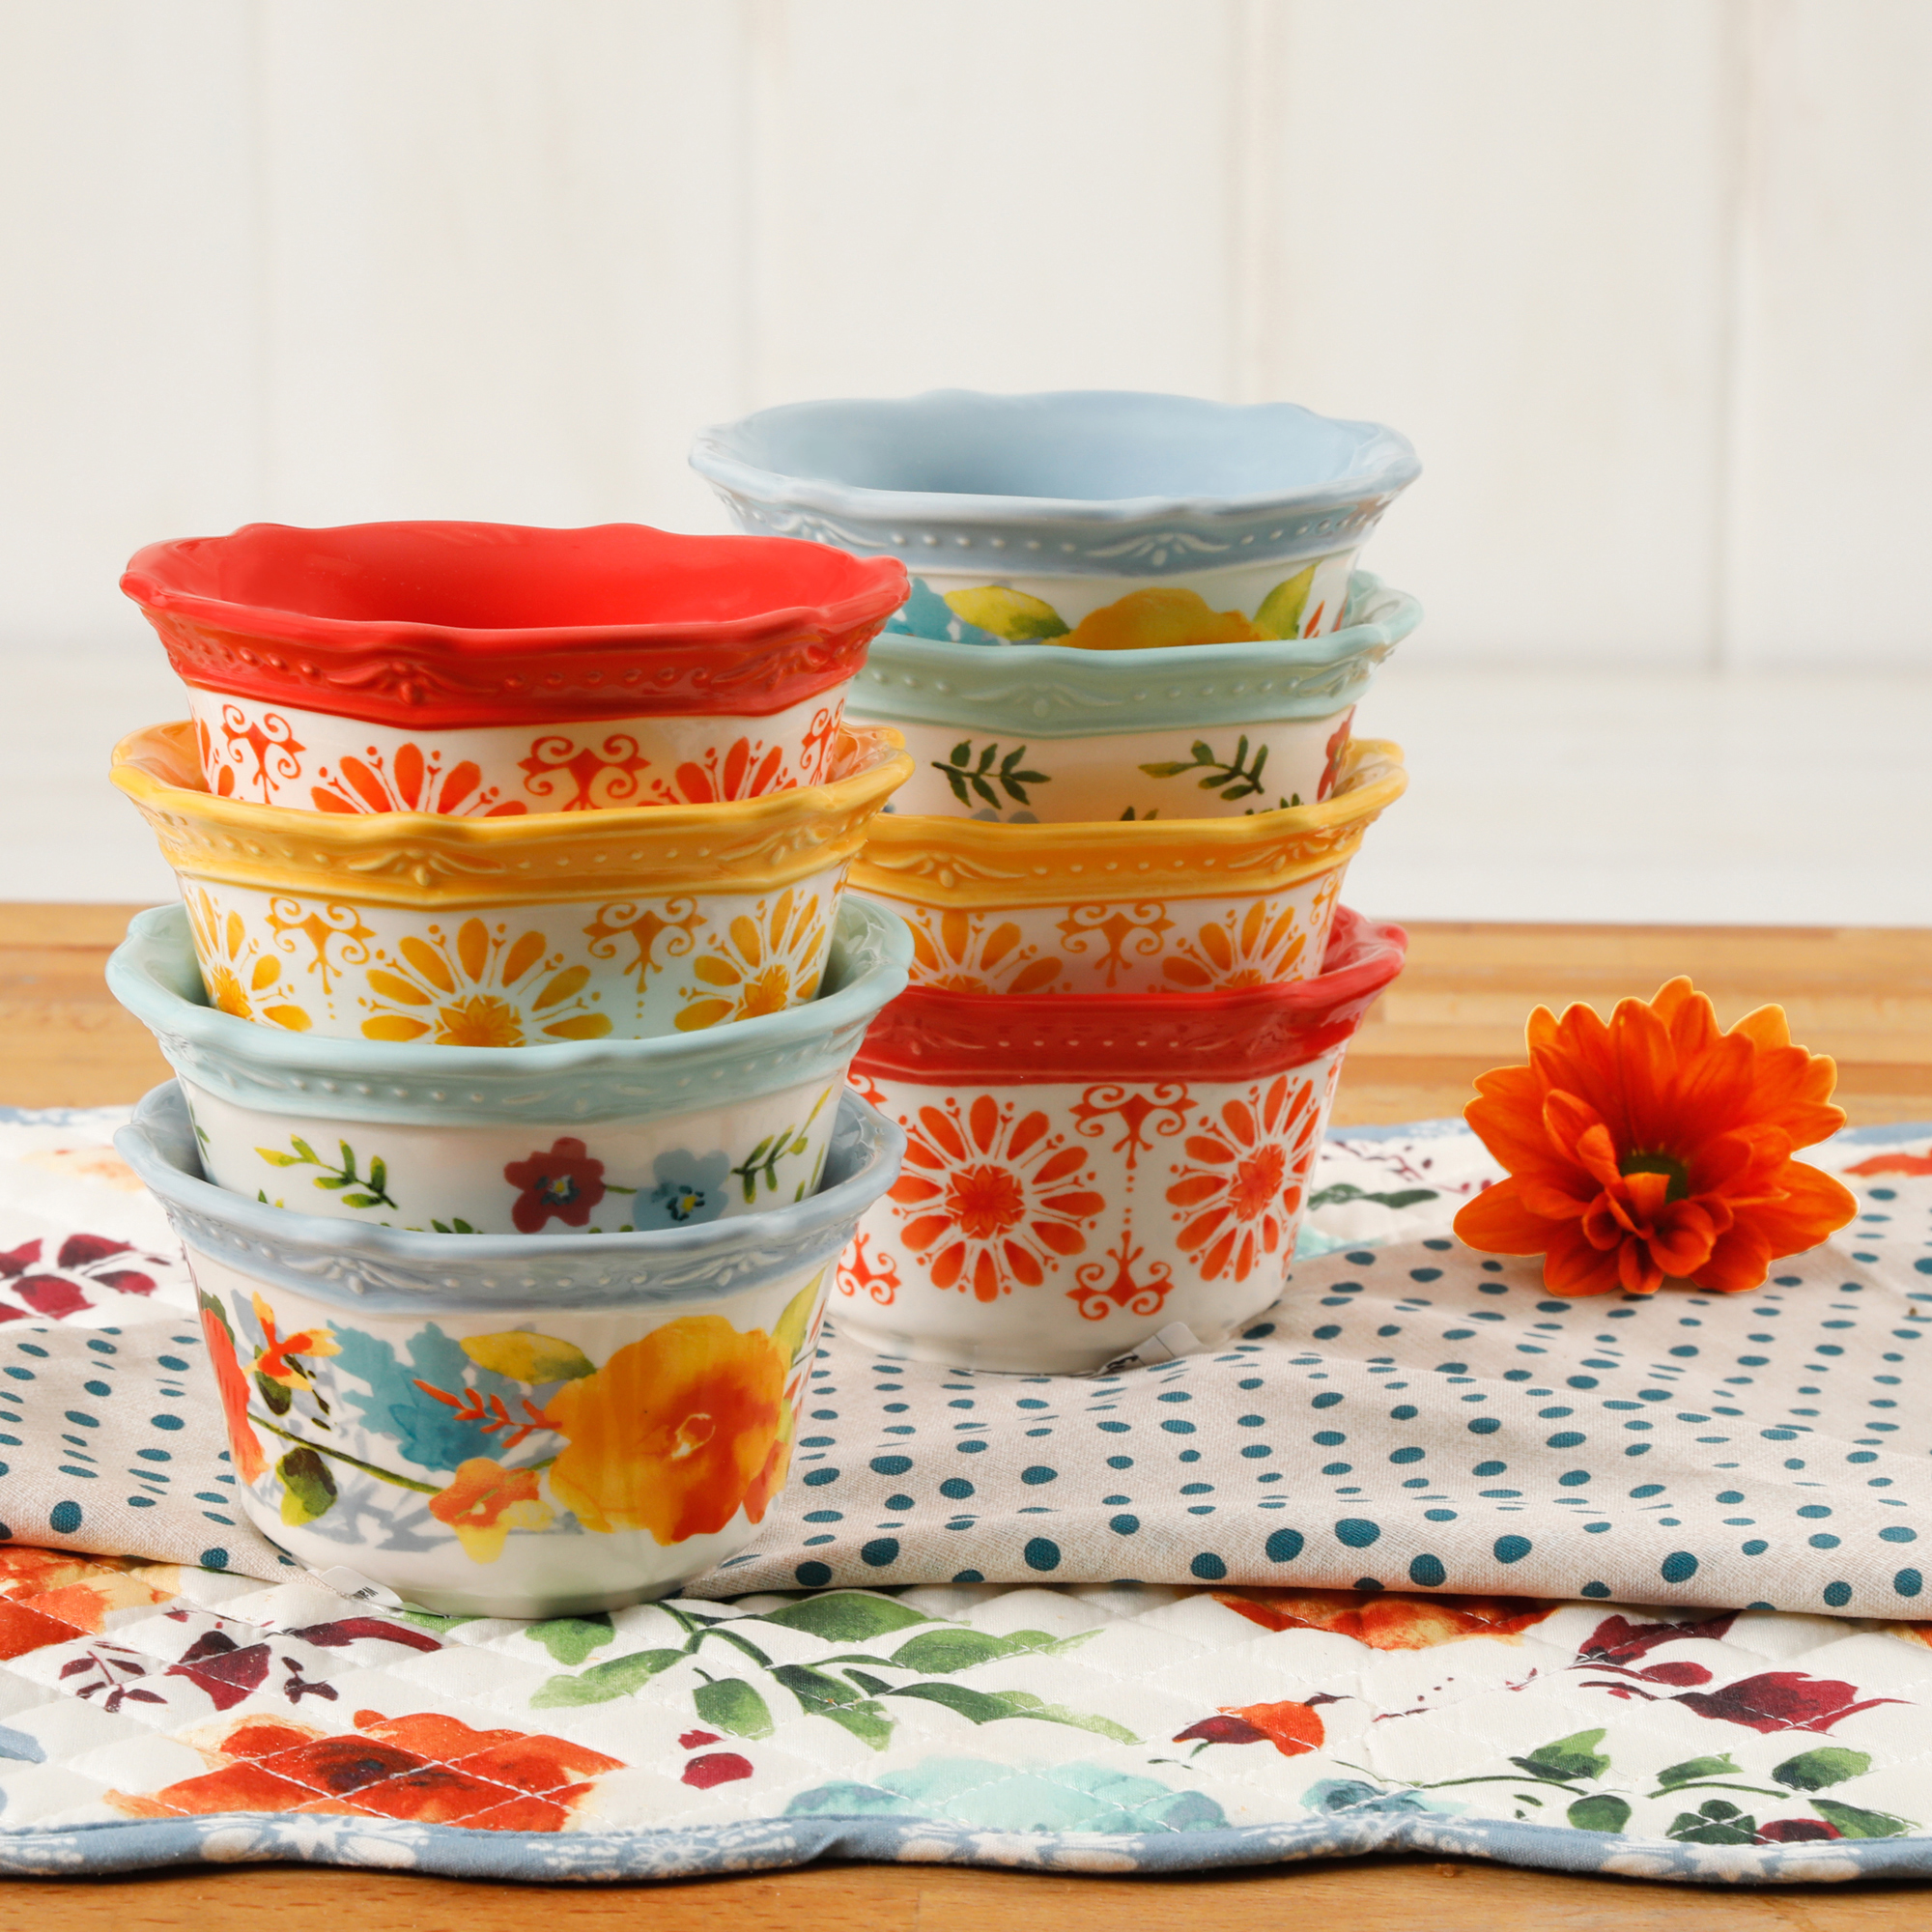 PRICE REDUCTION Pioneer Woman Ceramic Measuring Spoon Set. New in Package.  Vintage Floral Design. 